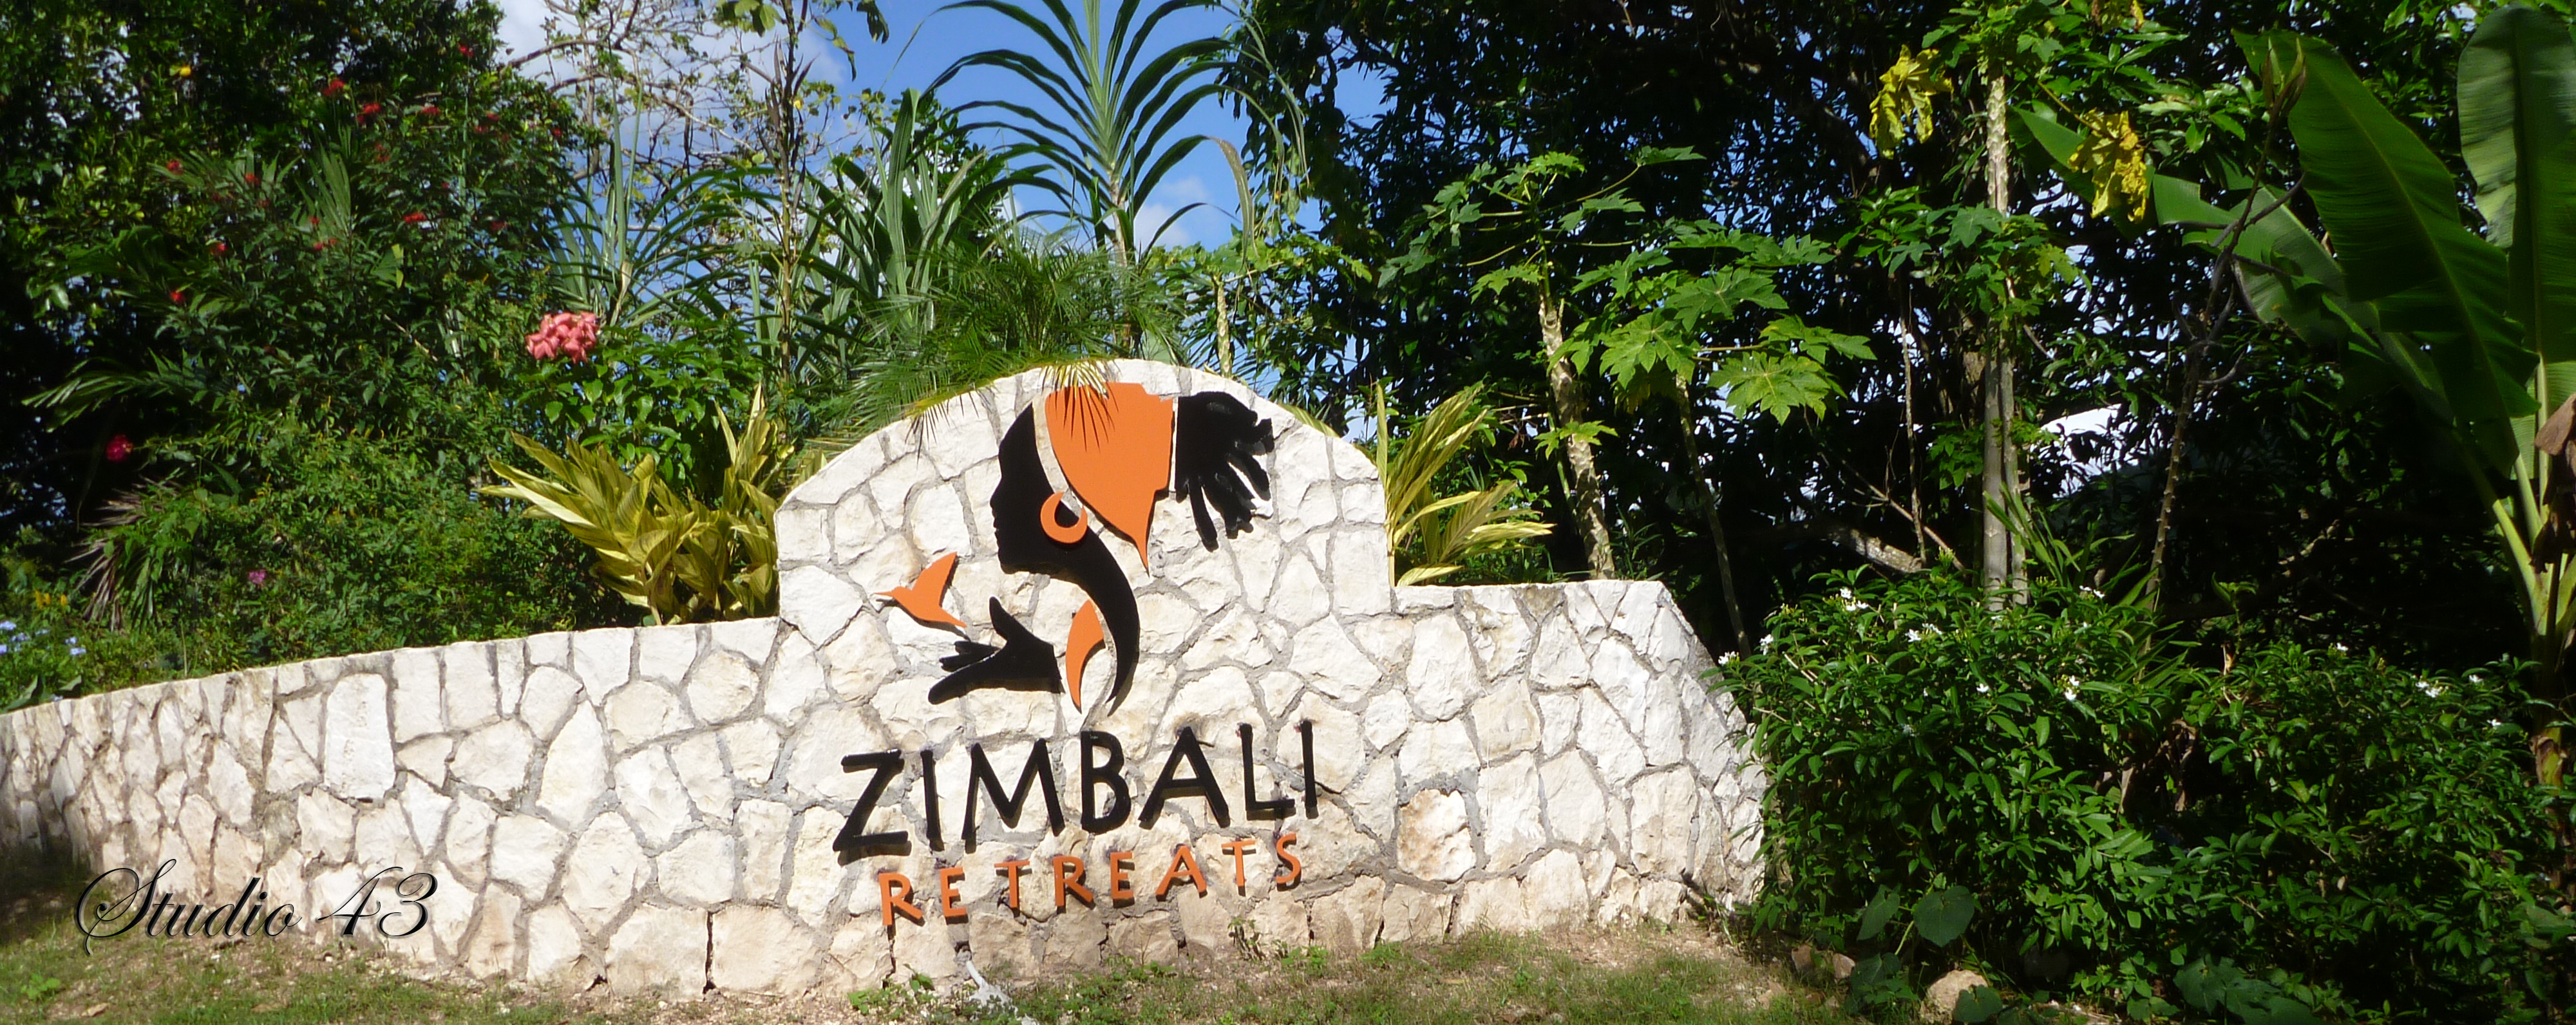 Image result for Zimbali Retreats